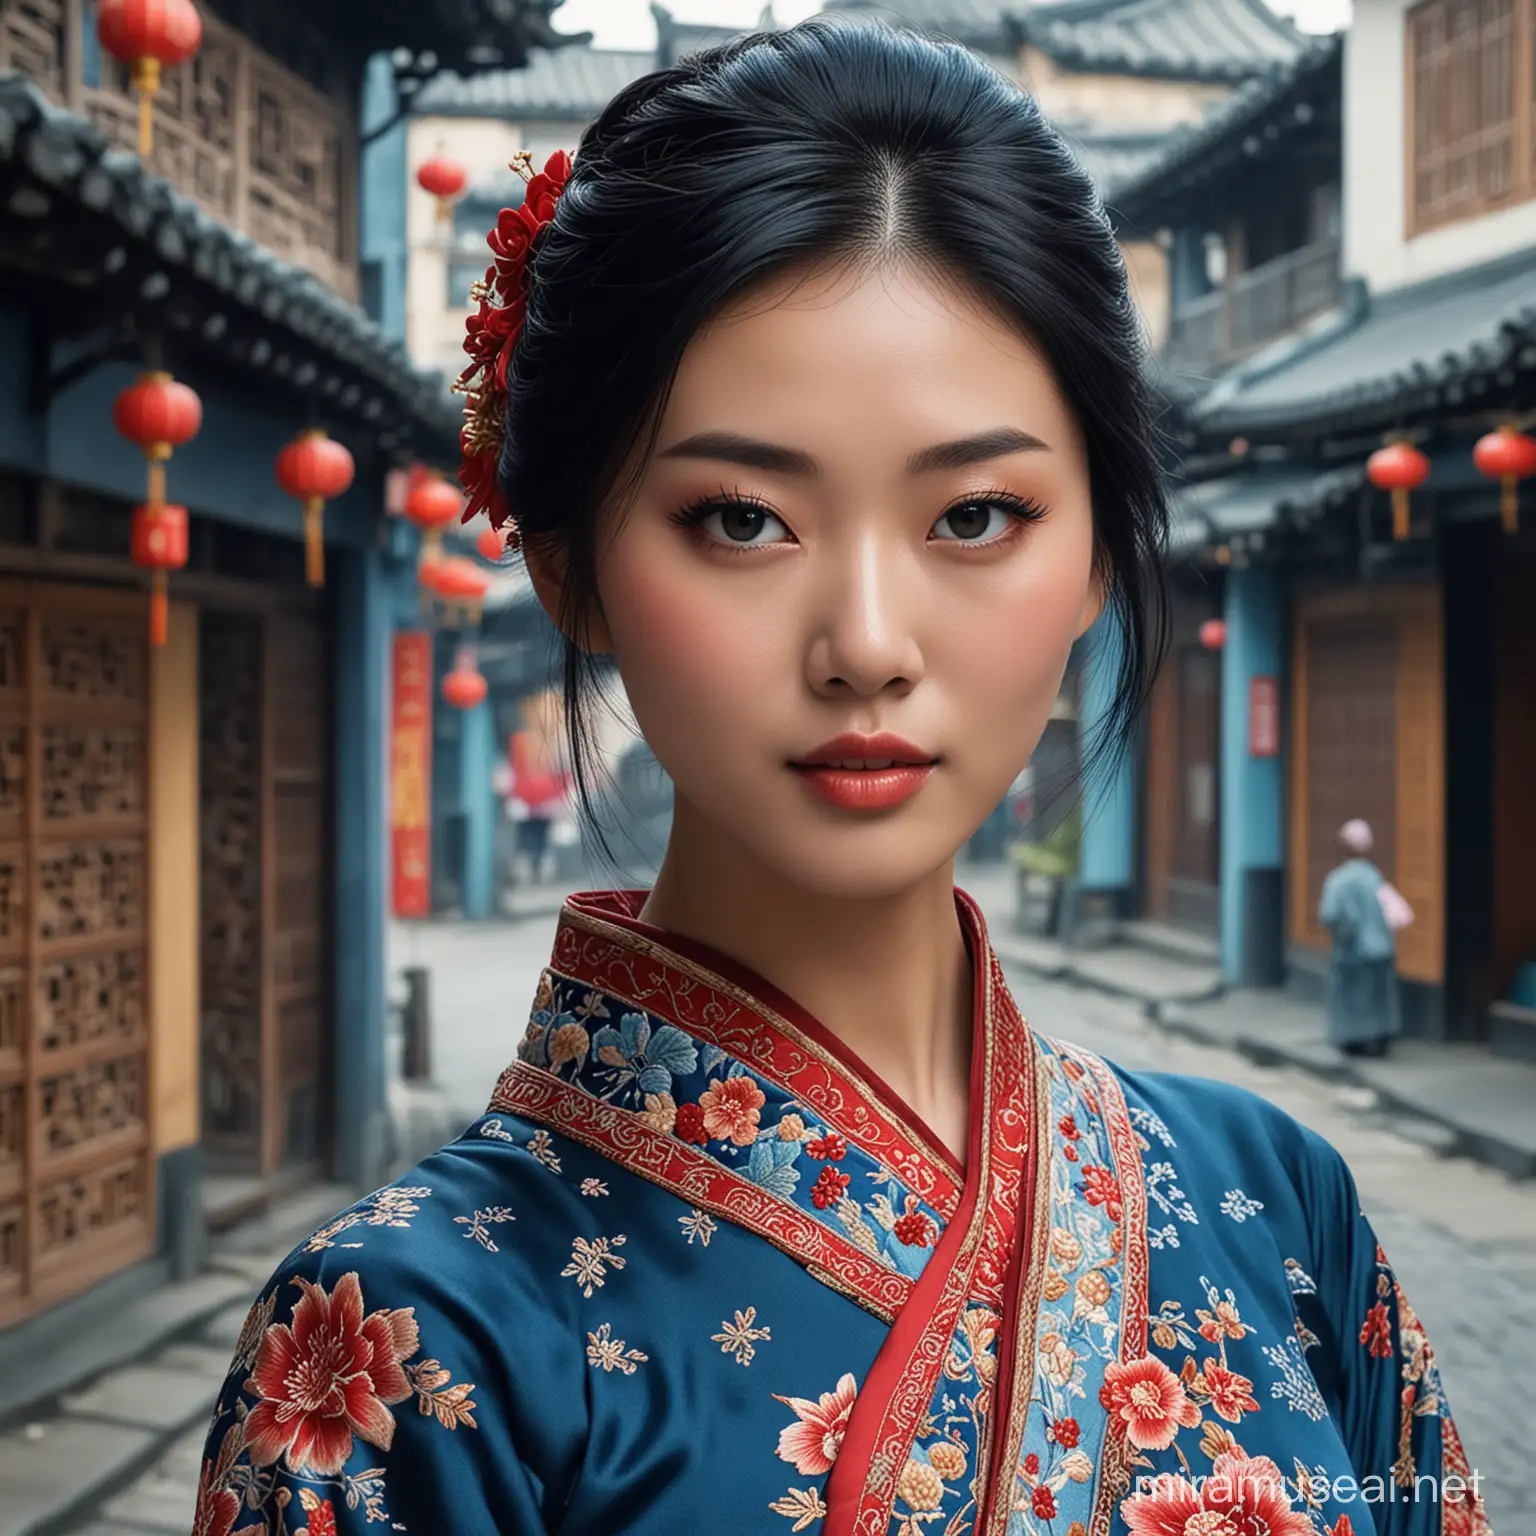 Elegant Chinese Woman in Scarlet Qipao with Striking Blue Eyes